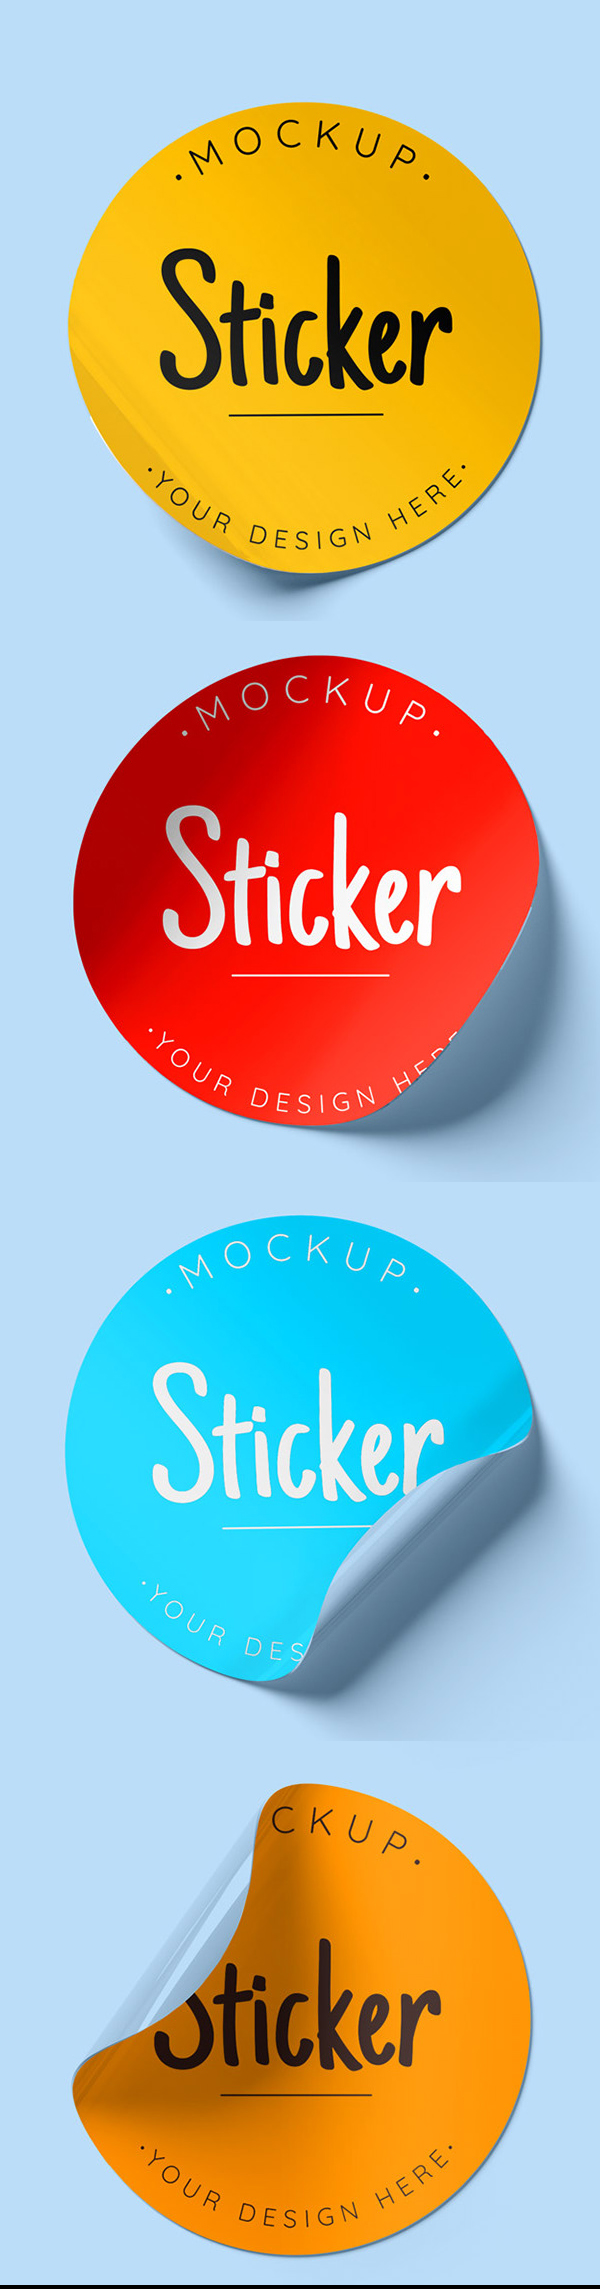 Free Sticker Mockup PSD